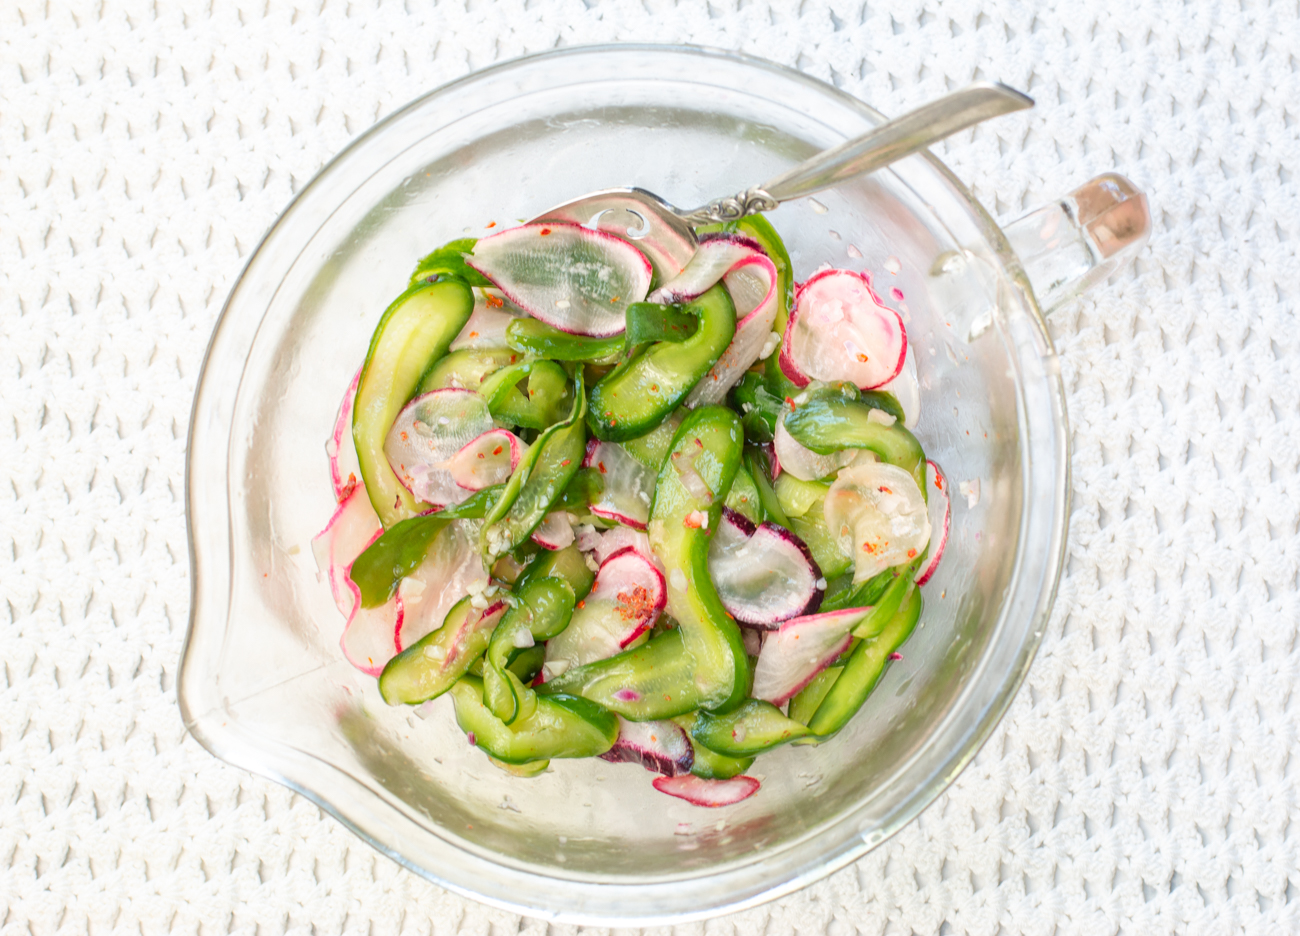 A quick Cucumber & Radish Salad - marinated with the Thai Chili Glaze